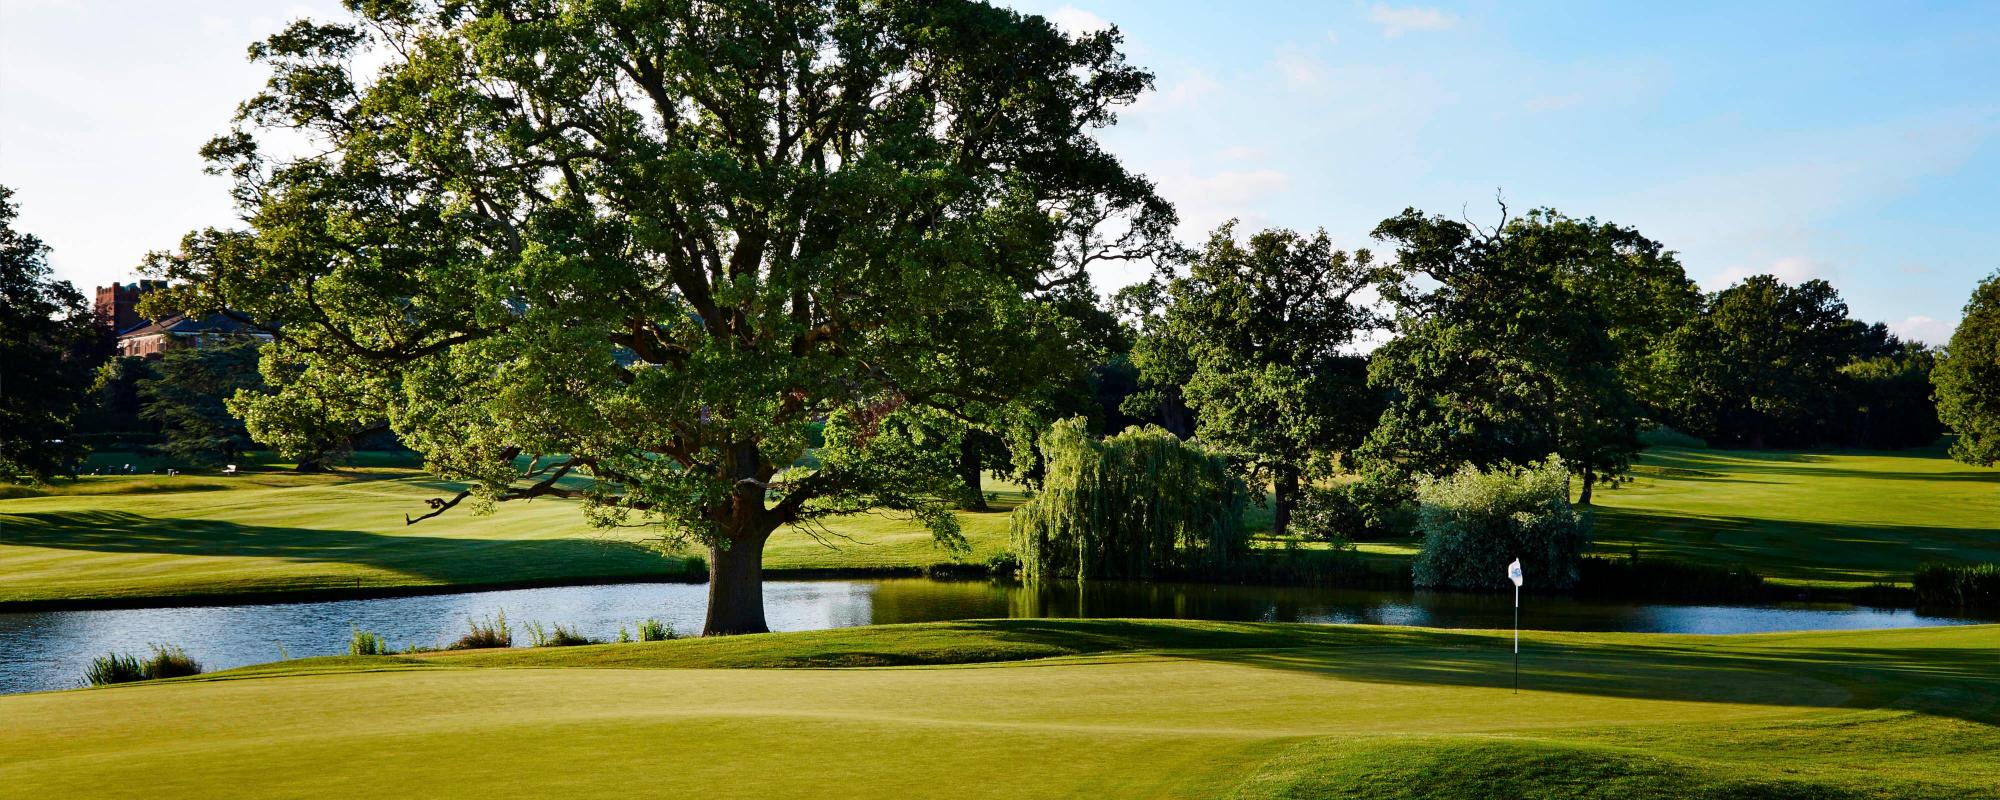 The Hanbury Manor Country Club's impressive golf course in brilliant Hertfordshire.